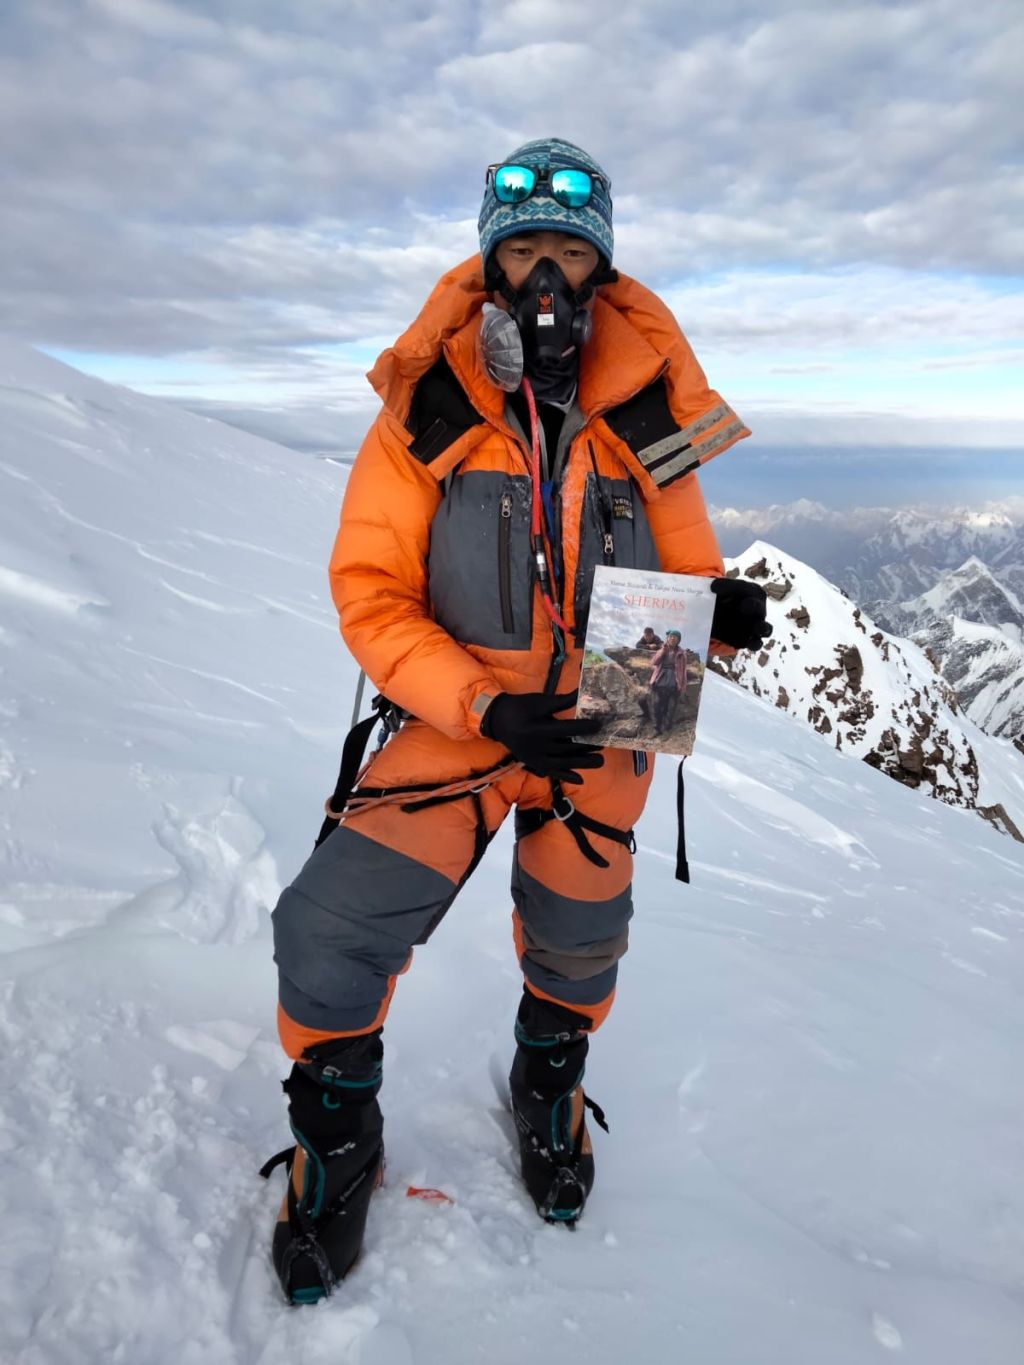 El libro ‘Sherpas’ llega a la cima del K2